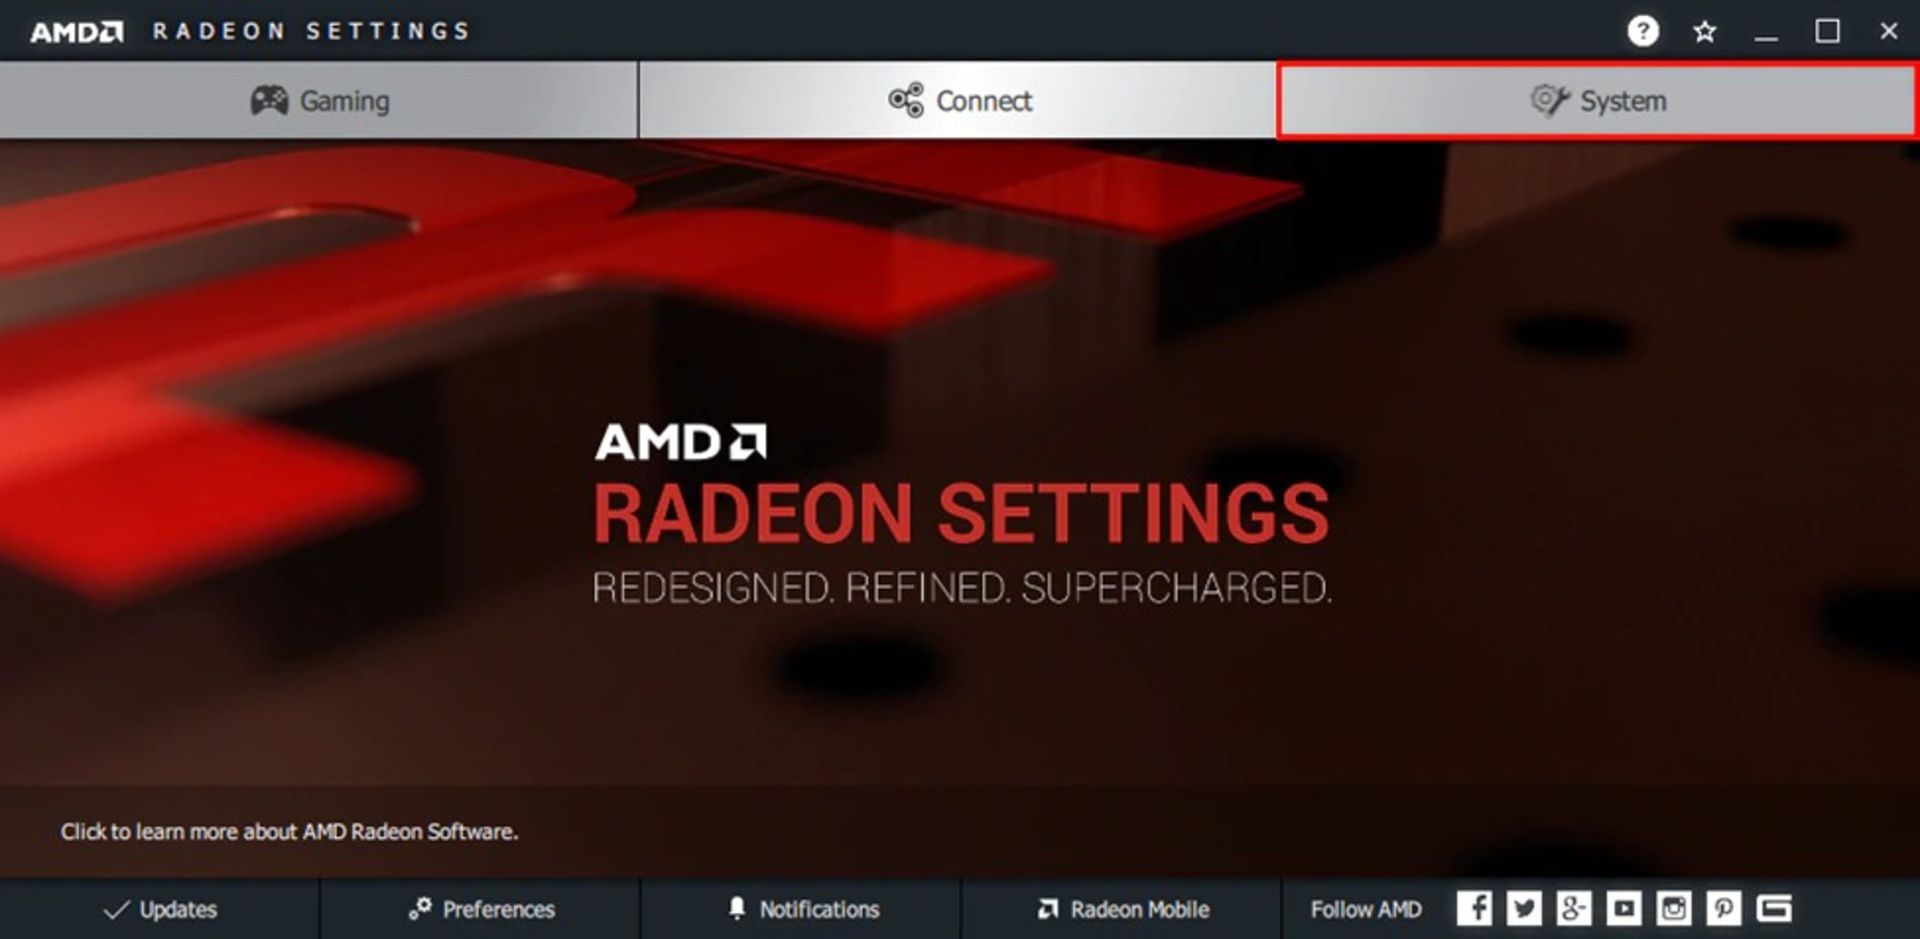 تنظیمات کارت گرافیک AMD